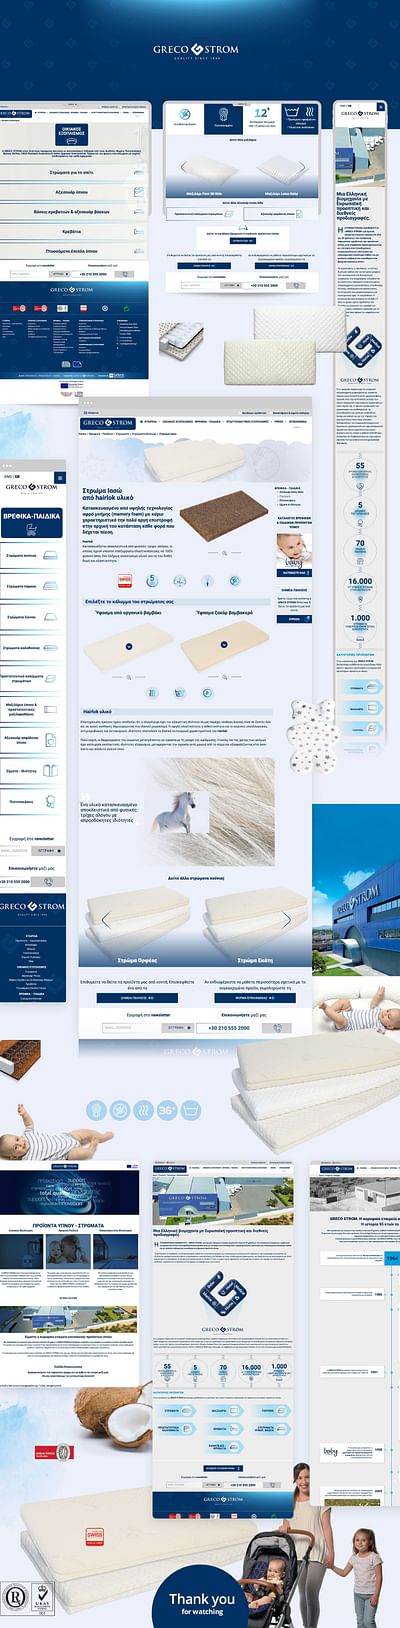 GRECO STROM Sleep mattresses - Strategia digitale